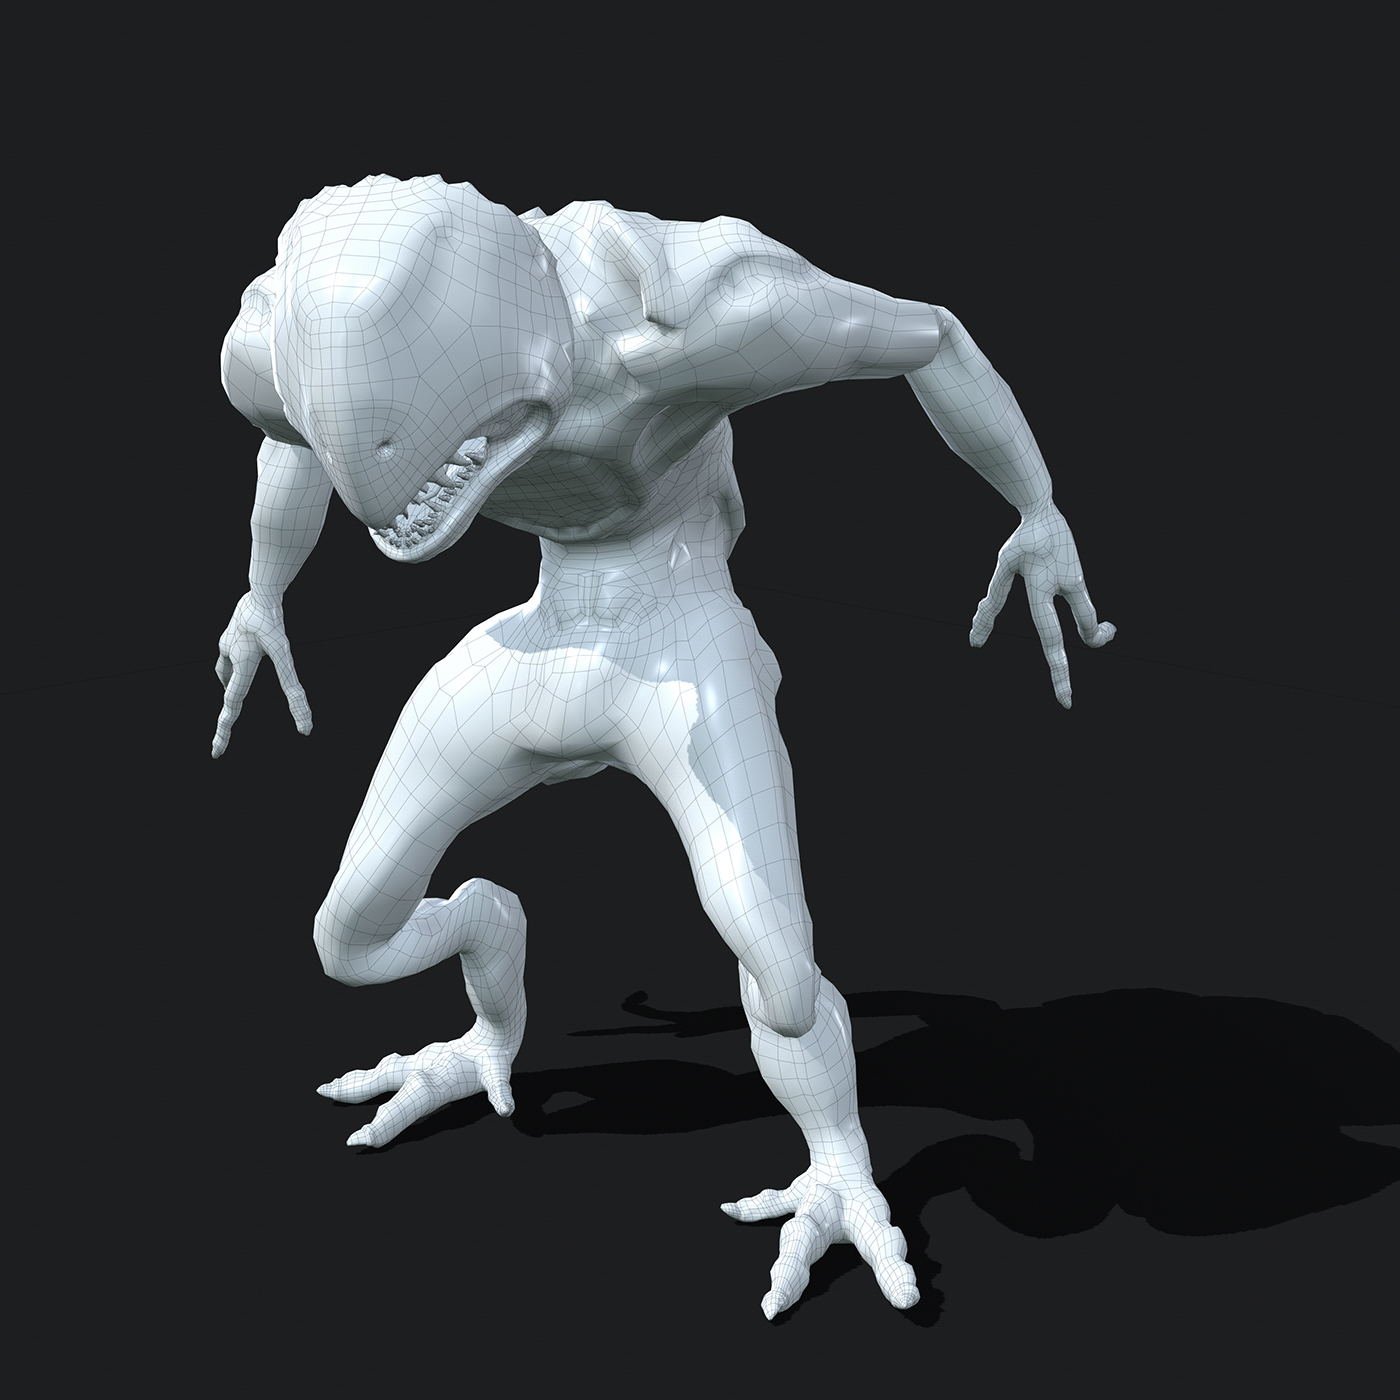 creepy mutant concept zombie fleshy animal 3D Render Character gamecharacter